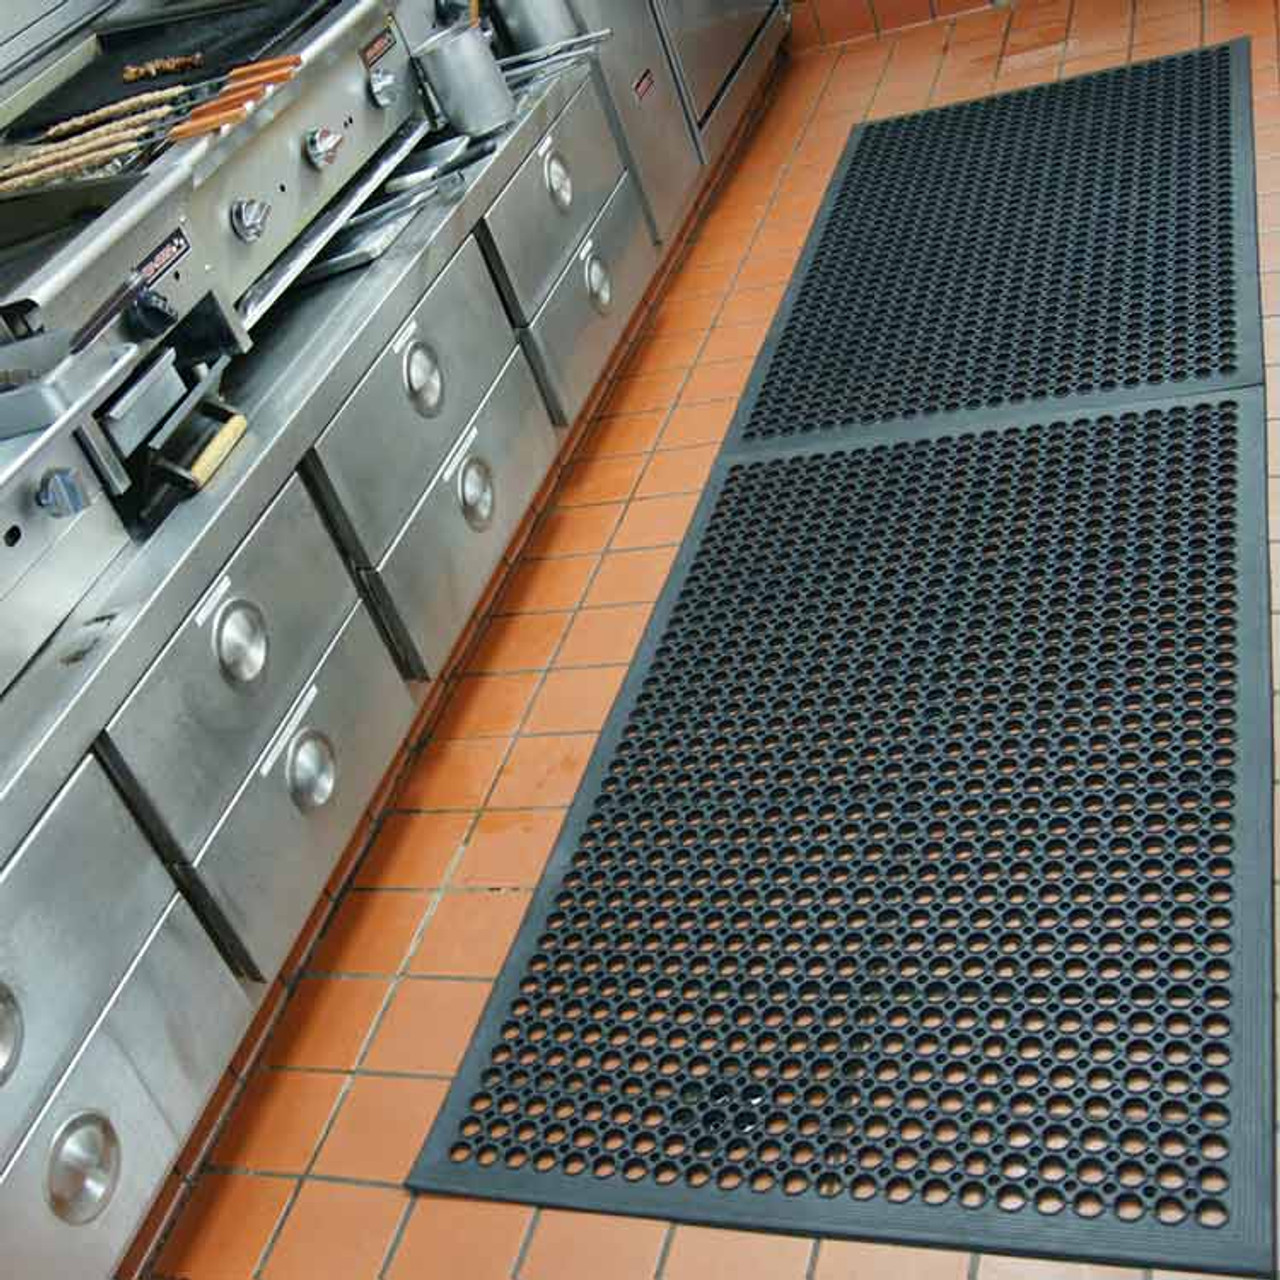 Rubber-Cal 7/8-Inch Dura-Chef Rubber Comfort Kitchen Mats - 7/8 x 38.5 x 58.5 inch - Black Rubber Mat